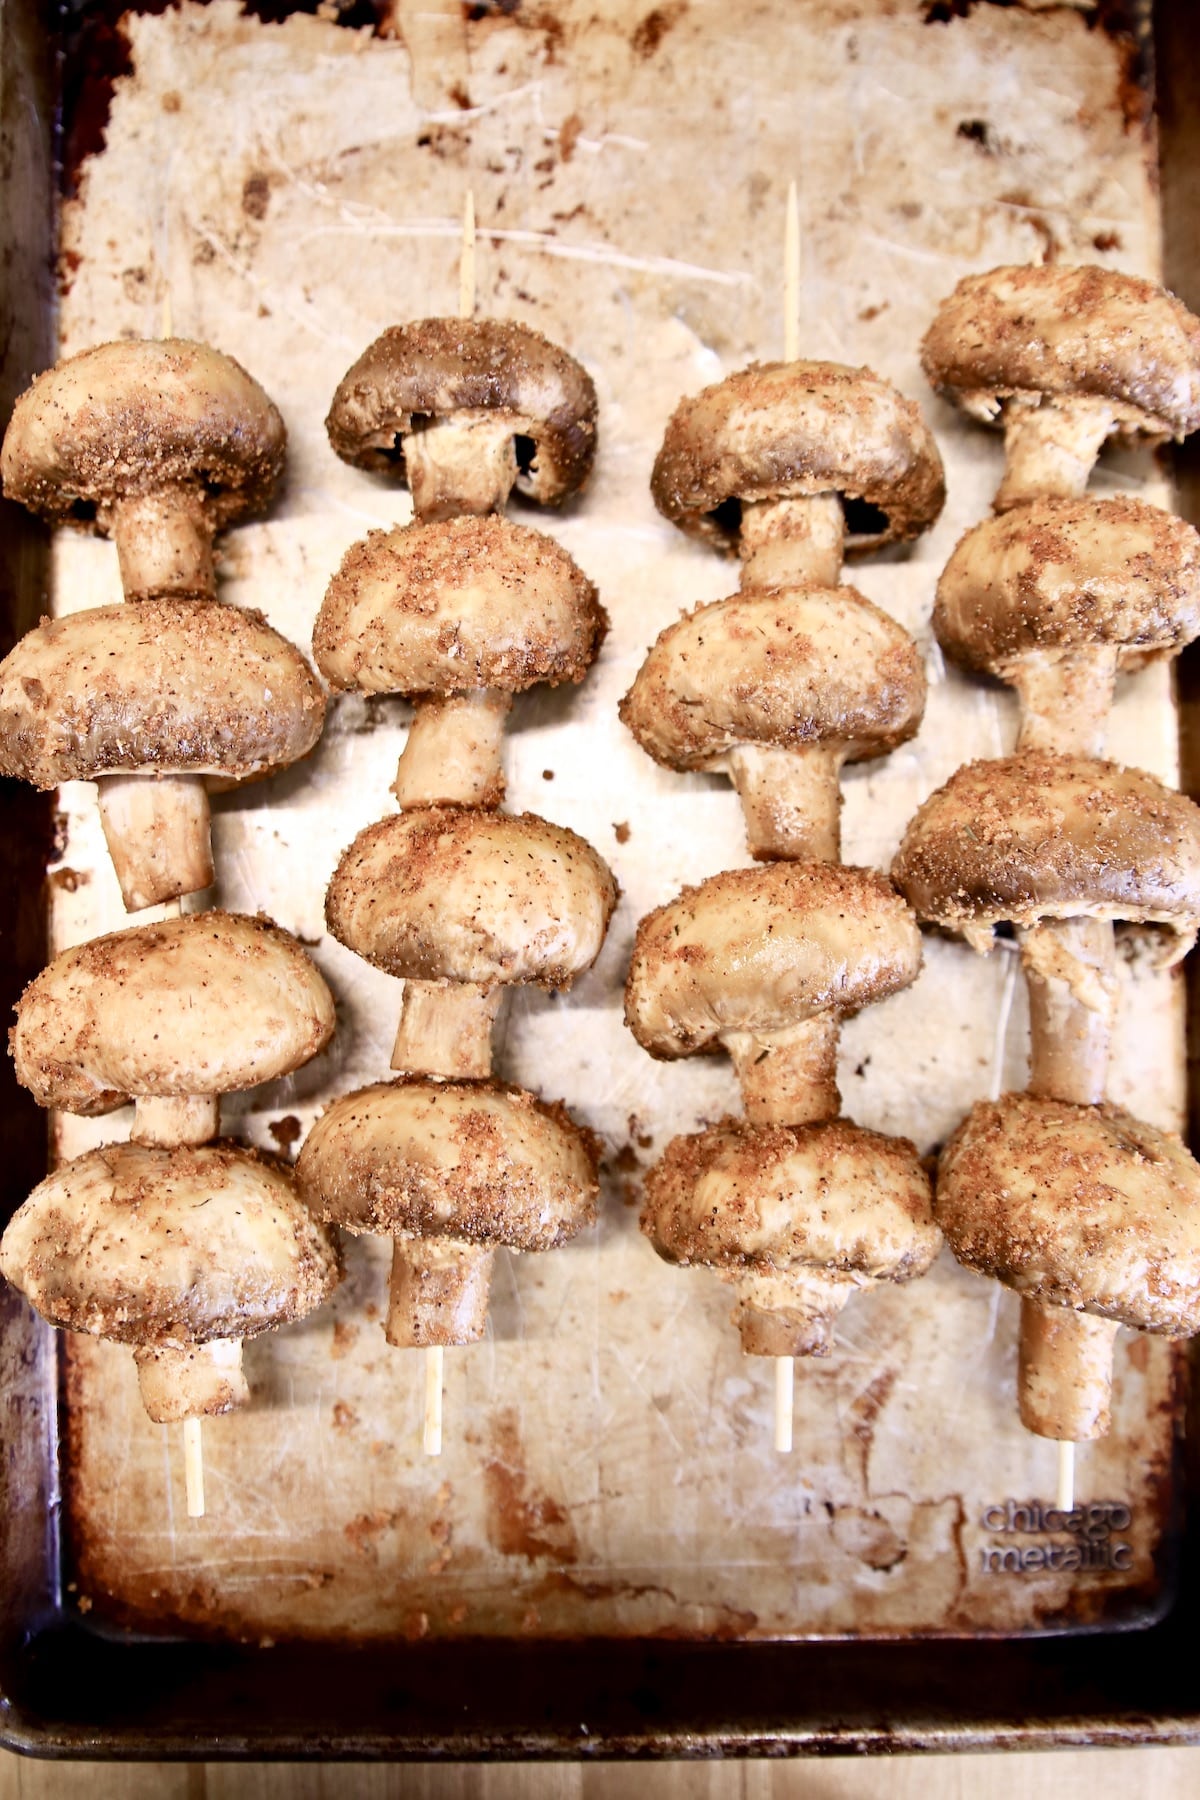 Mushroom skewers ready to grill.